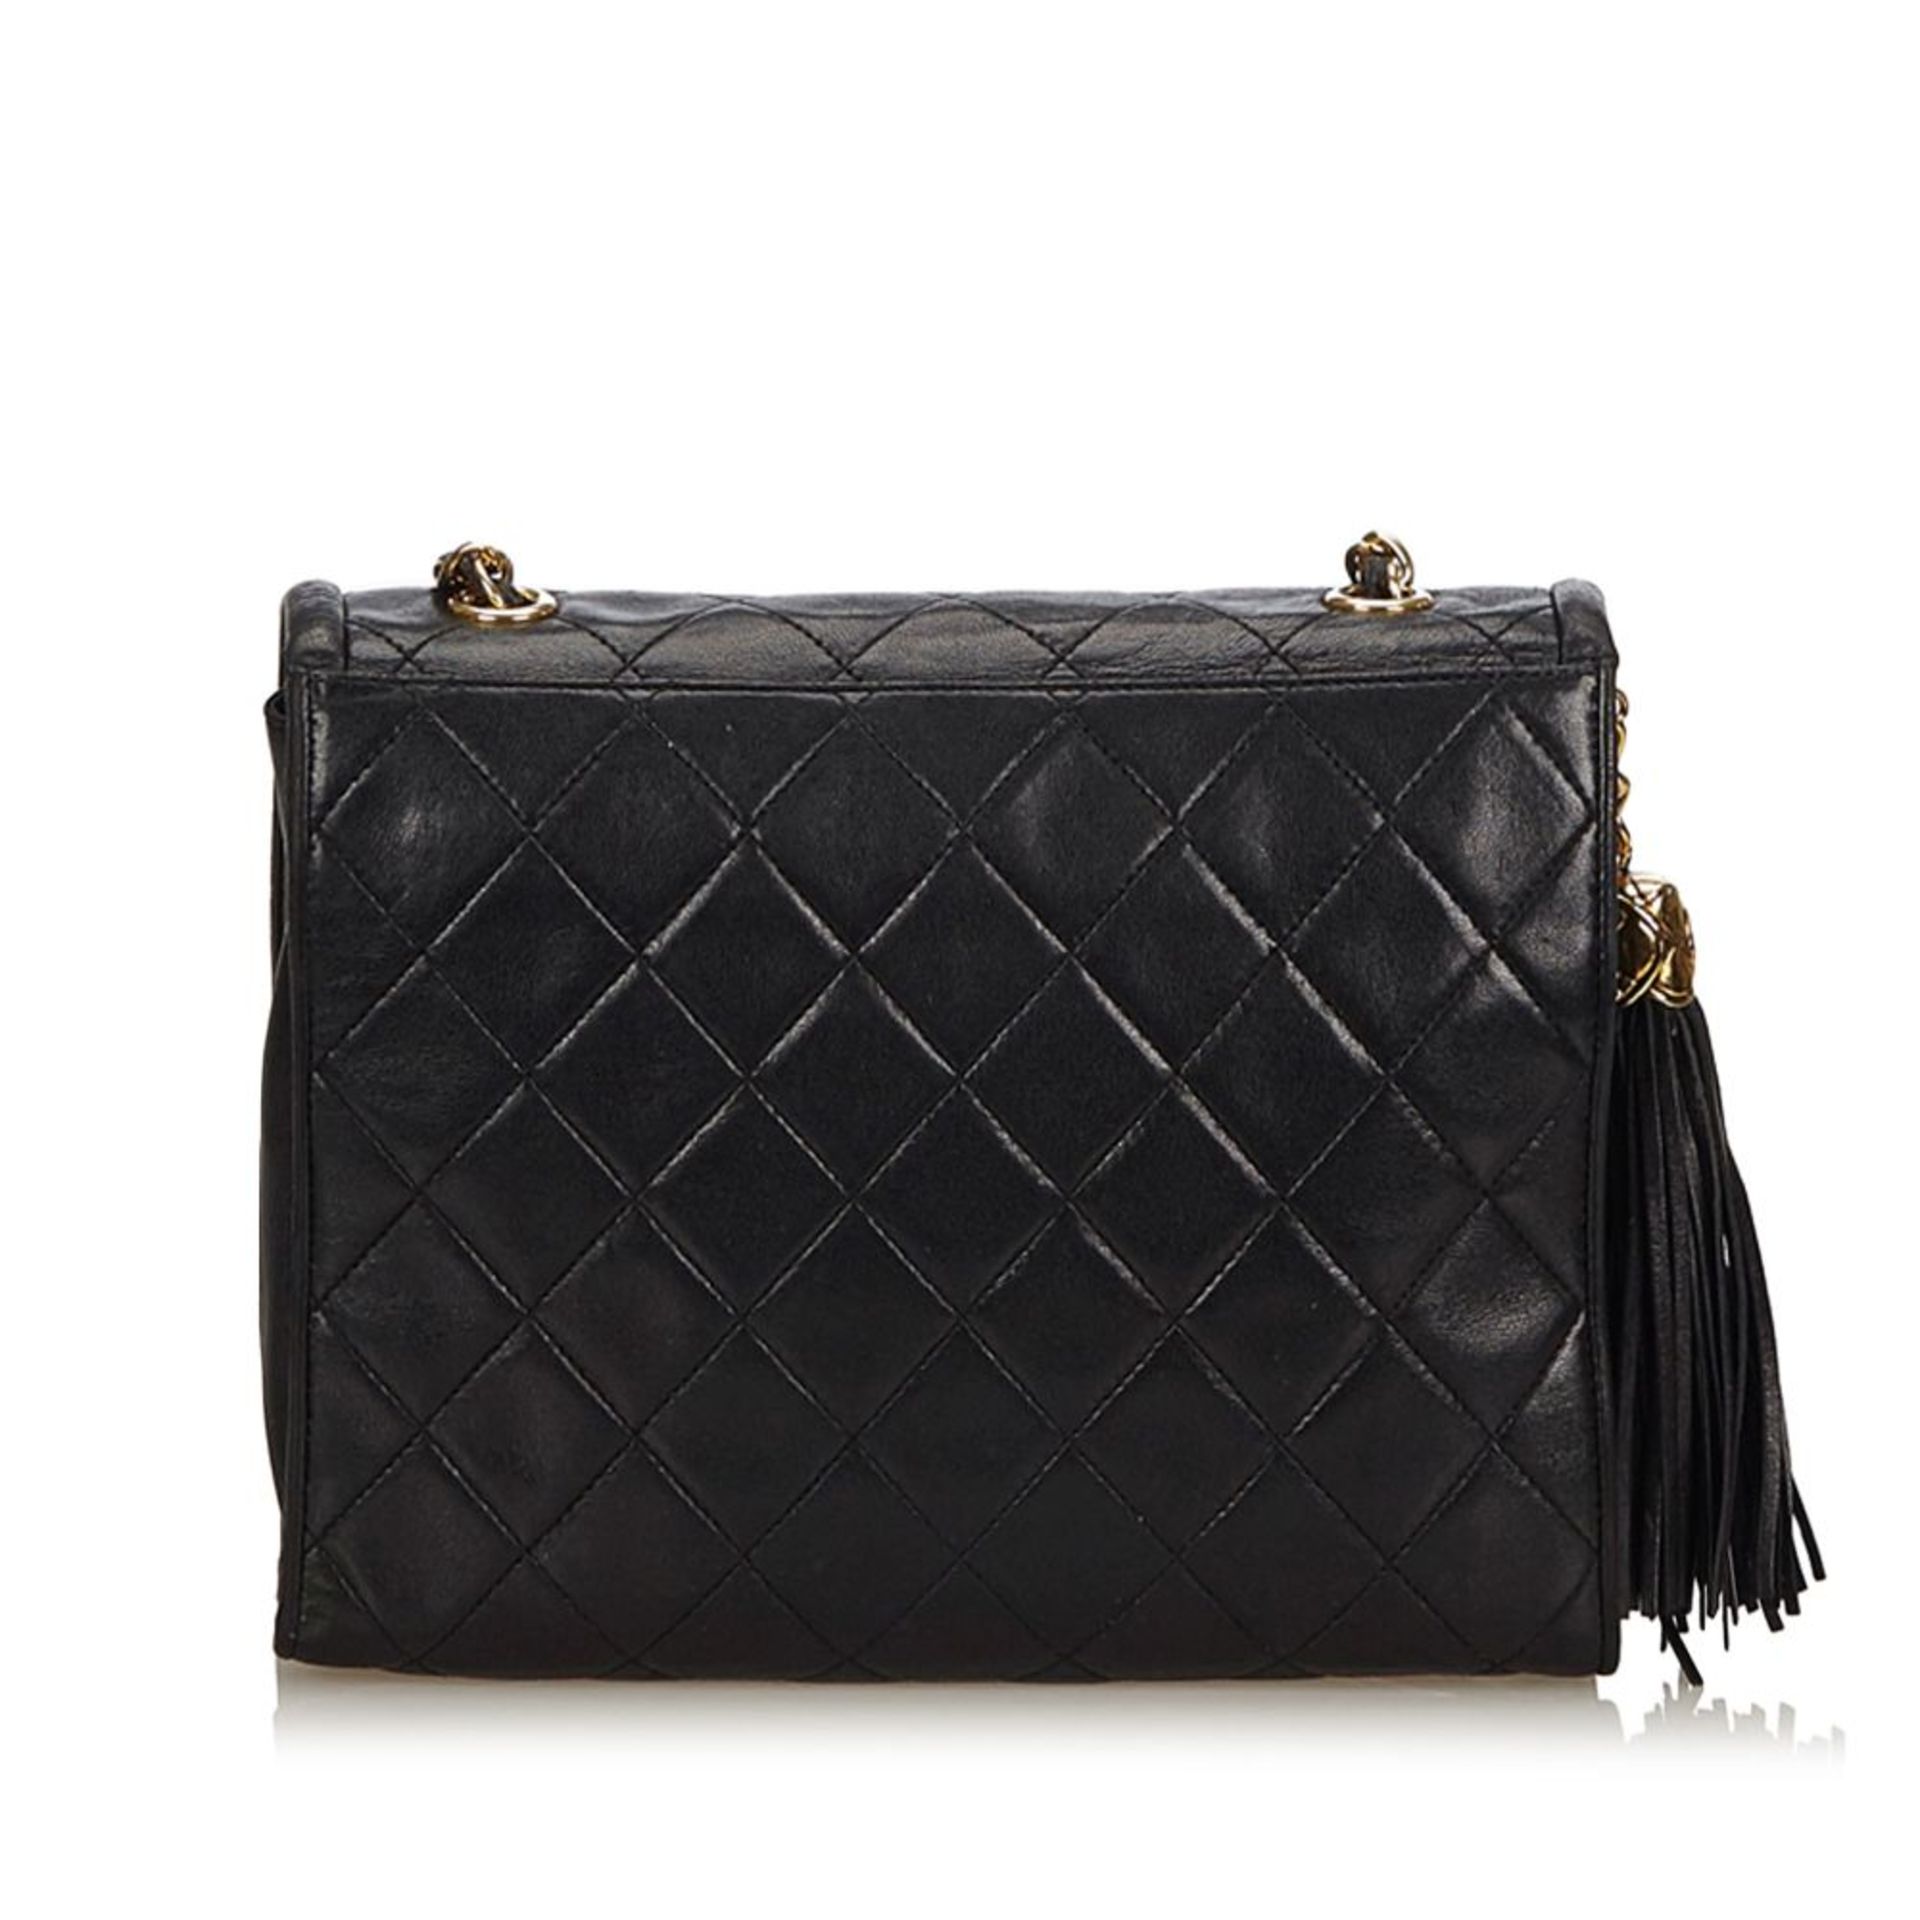 A Chanel matelassé tassel double flap shoulder bag,featuring a lambskin leather body, gold-tone - Bild 3 aus 5